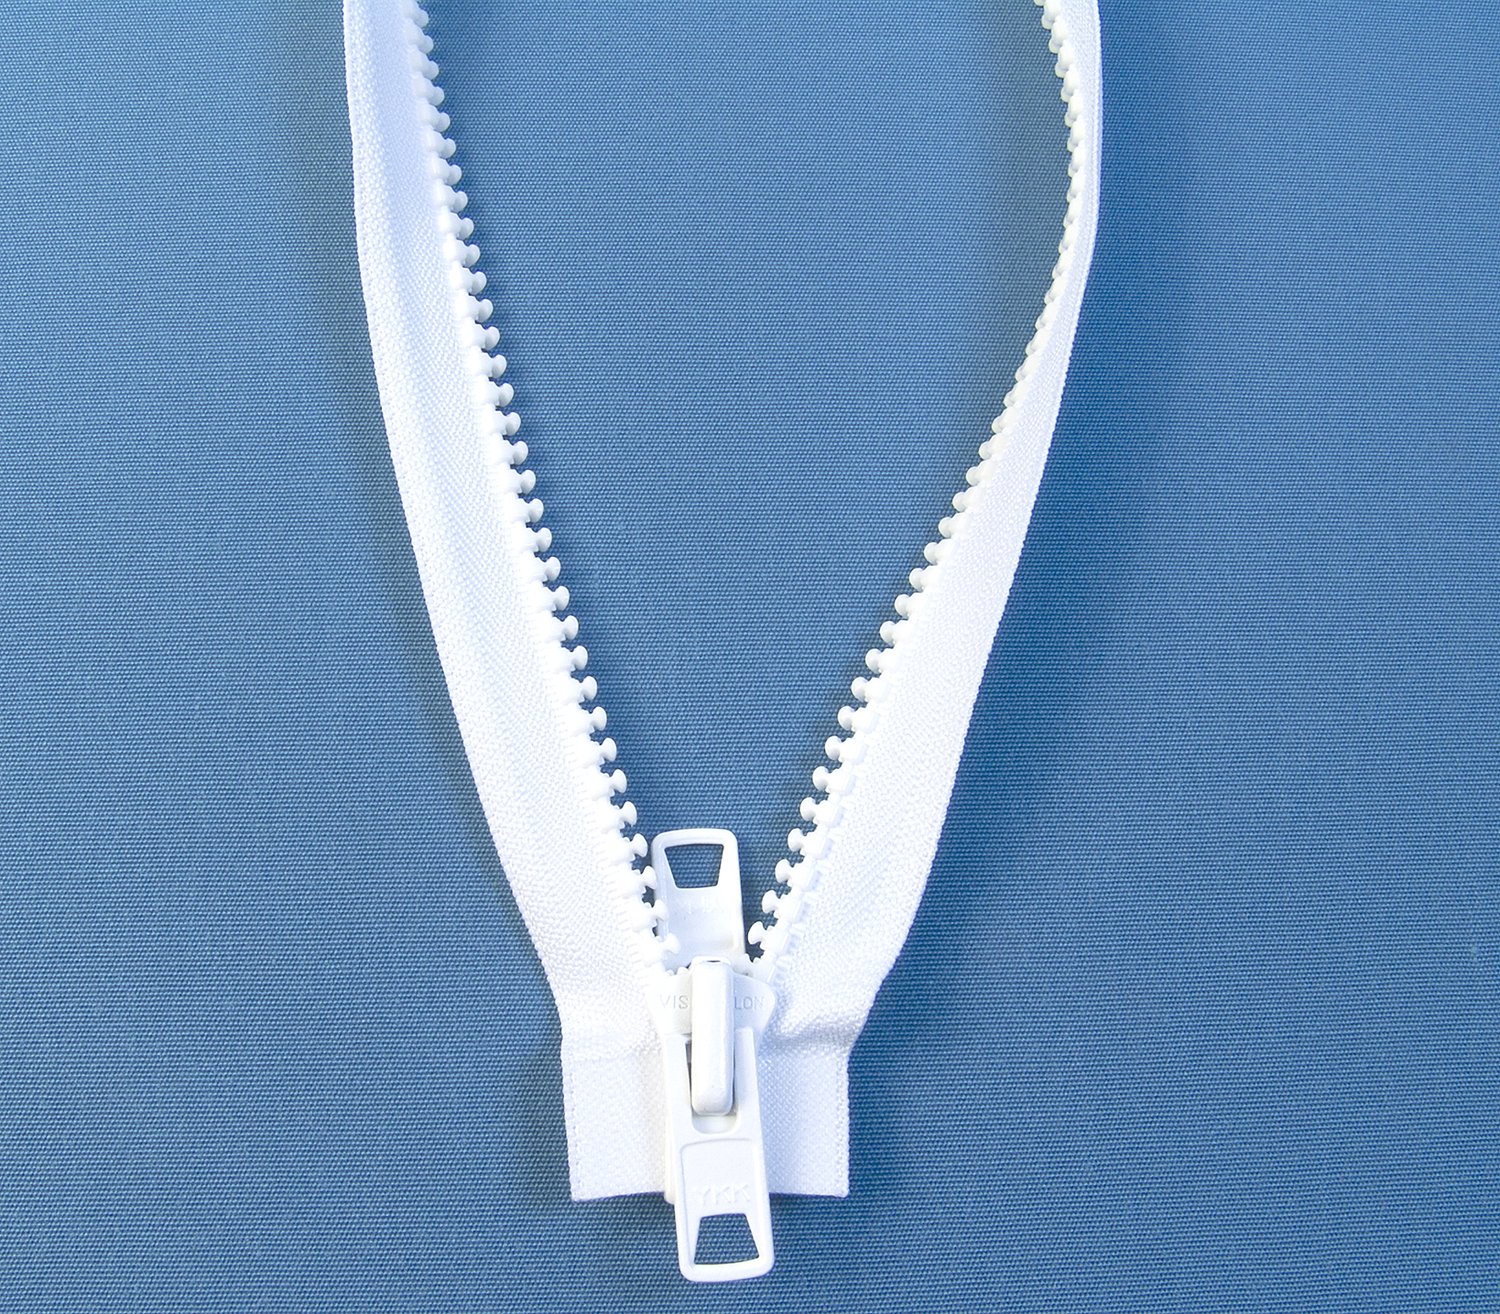 YKK #10 Extra Heavy Duty White Aluminum Separating Long Zipper Zipper -  Choose Your Length - Color: White (1 Zipper Per Pack) (84 Inches)